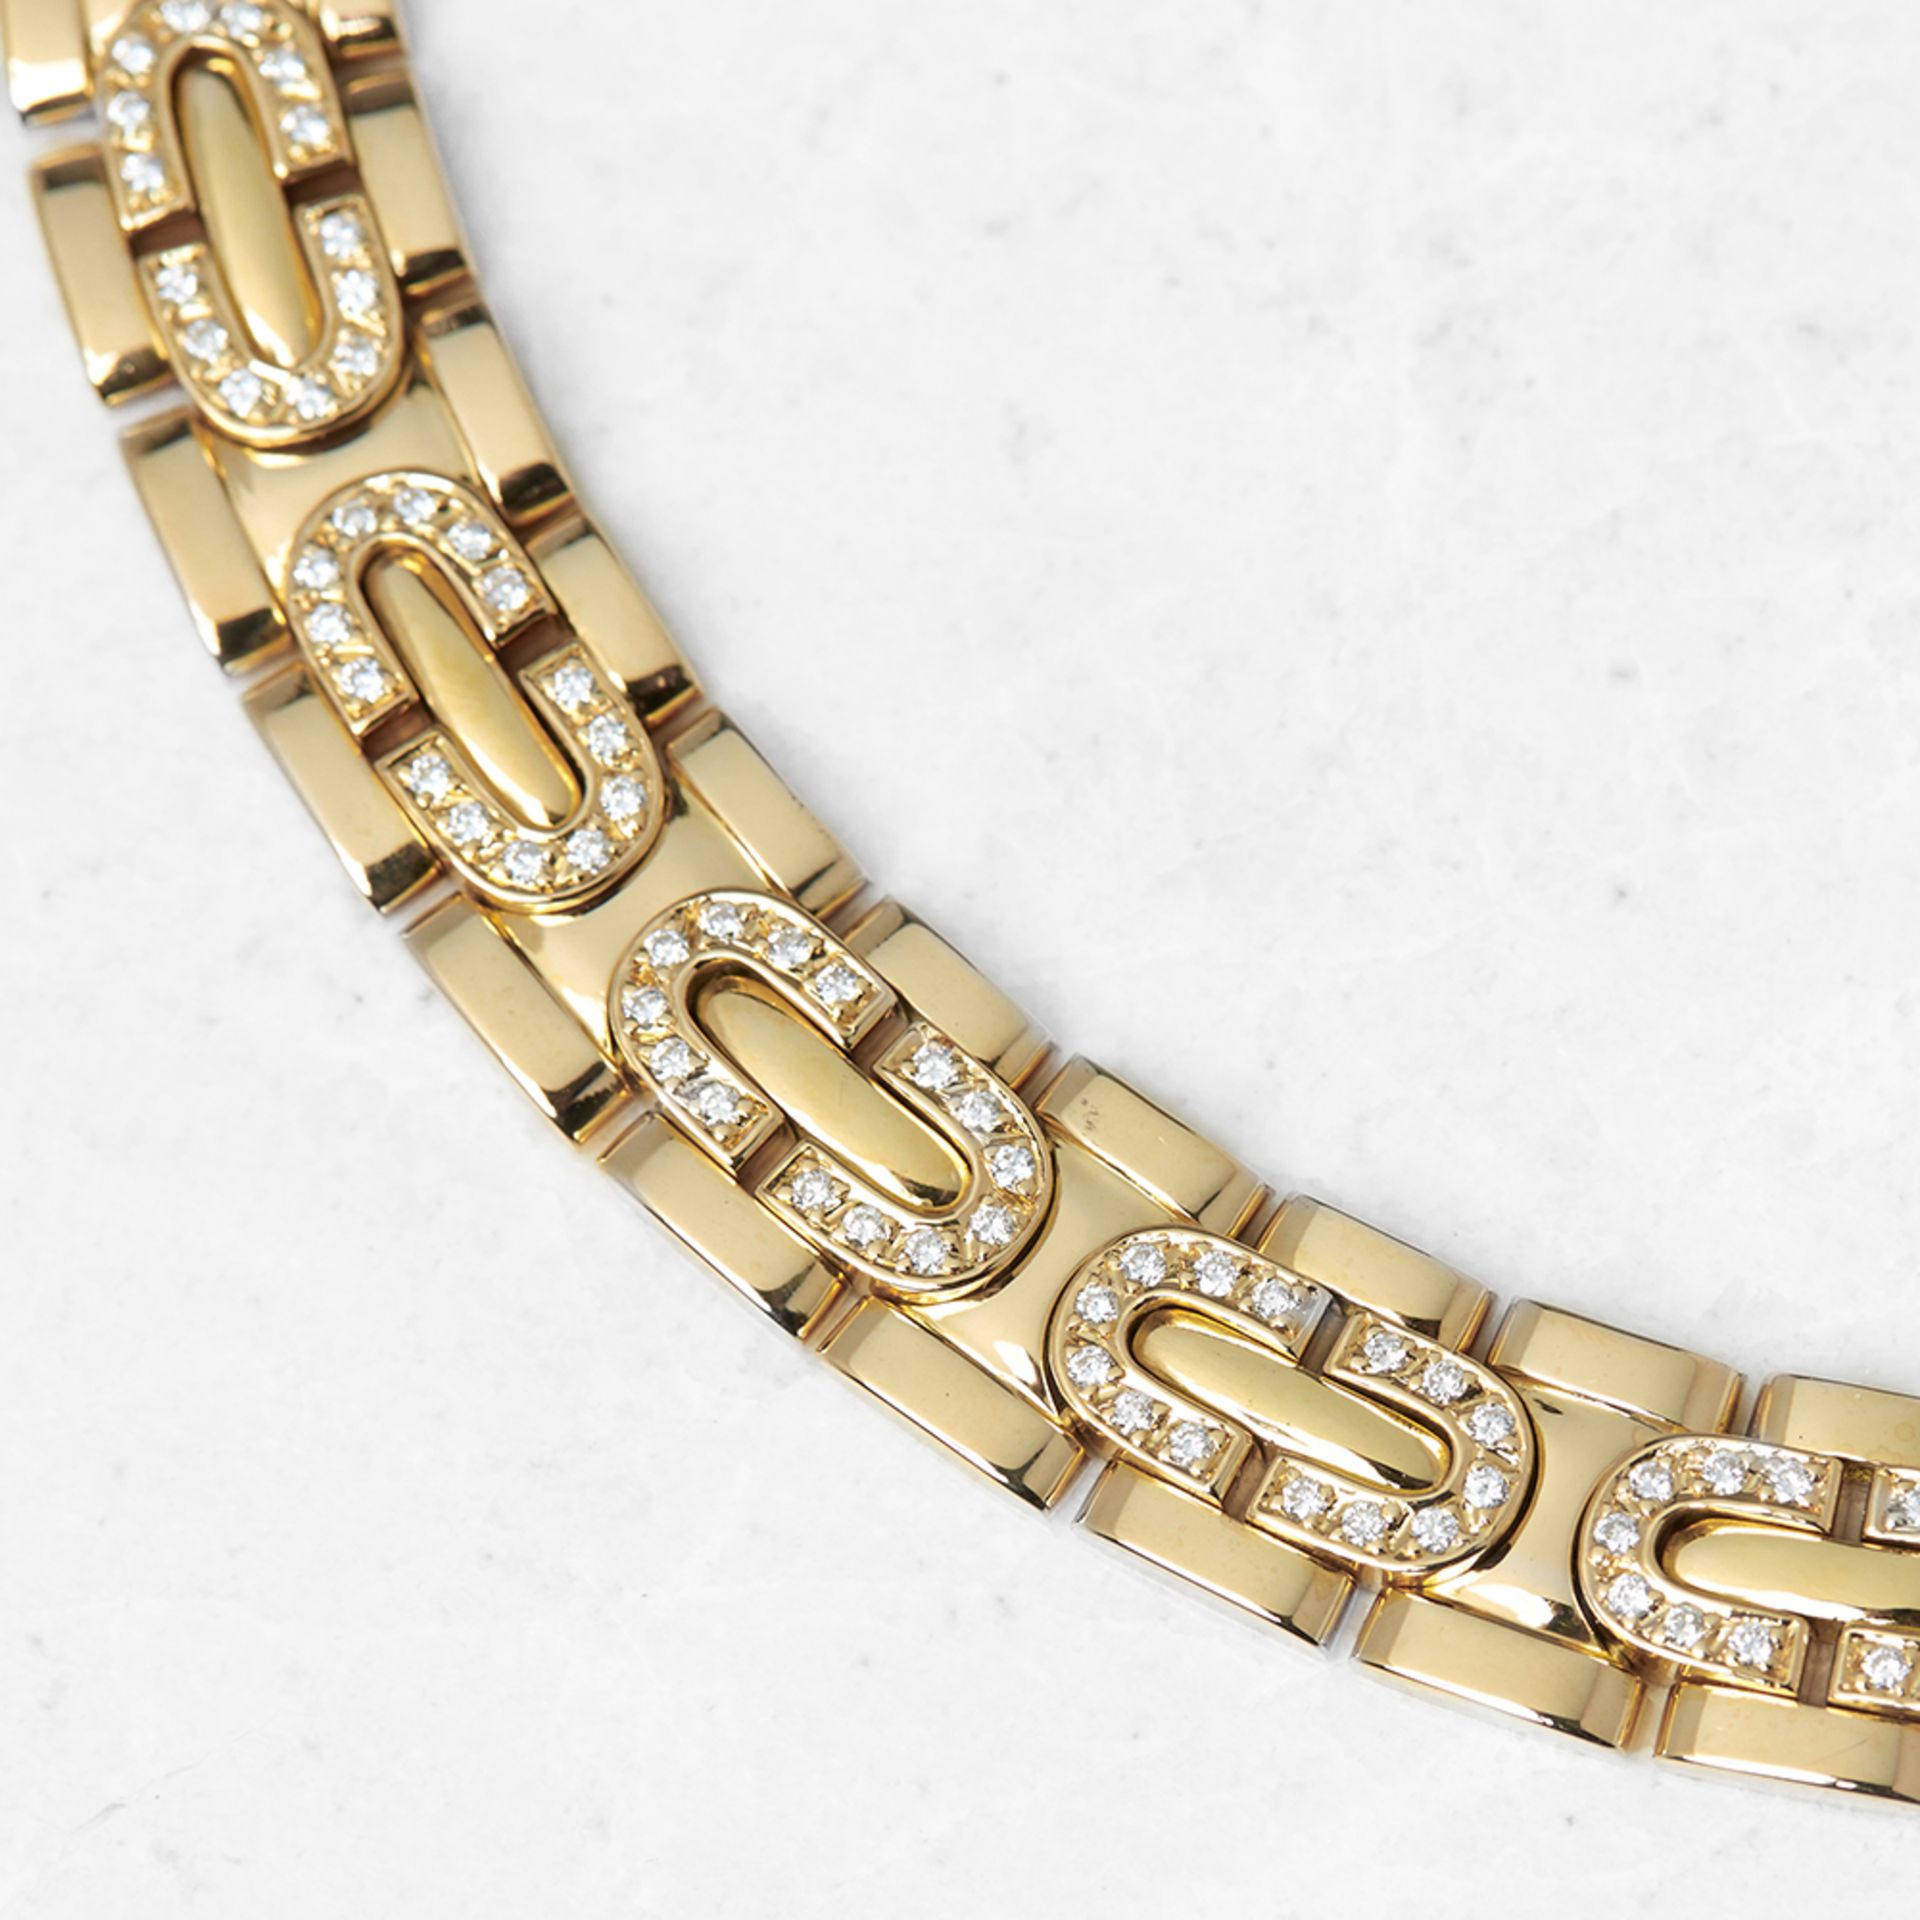 Cartier 18k Yellow Gold Oval Link Collar 0.70ct Diamond Panthre Necklace with Box & Papers